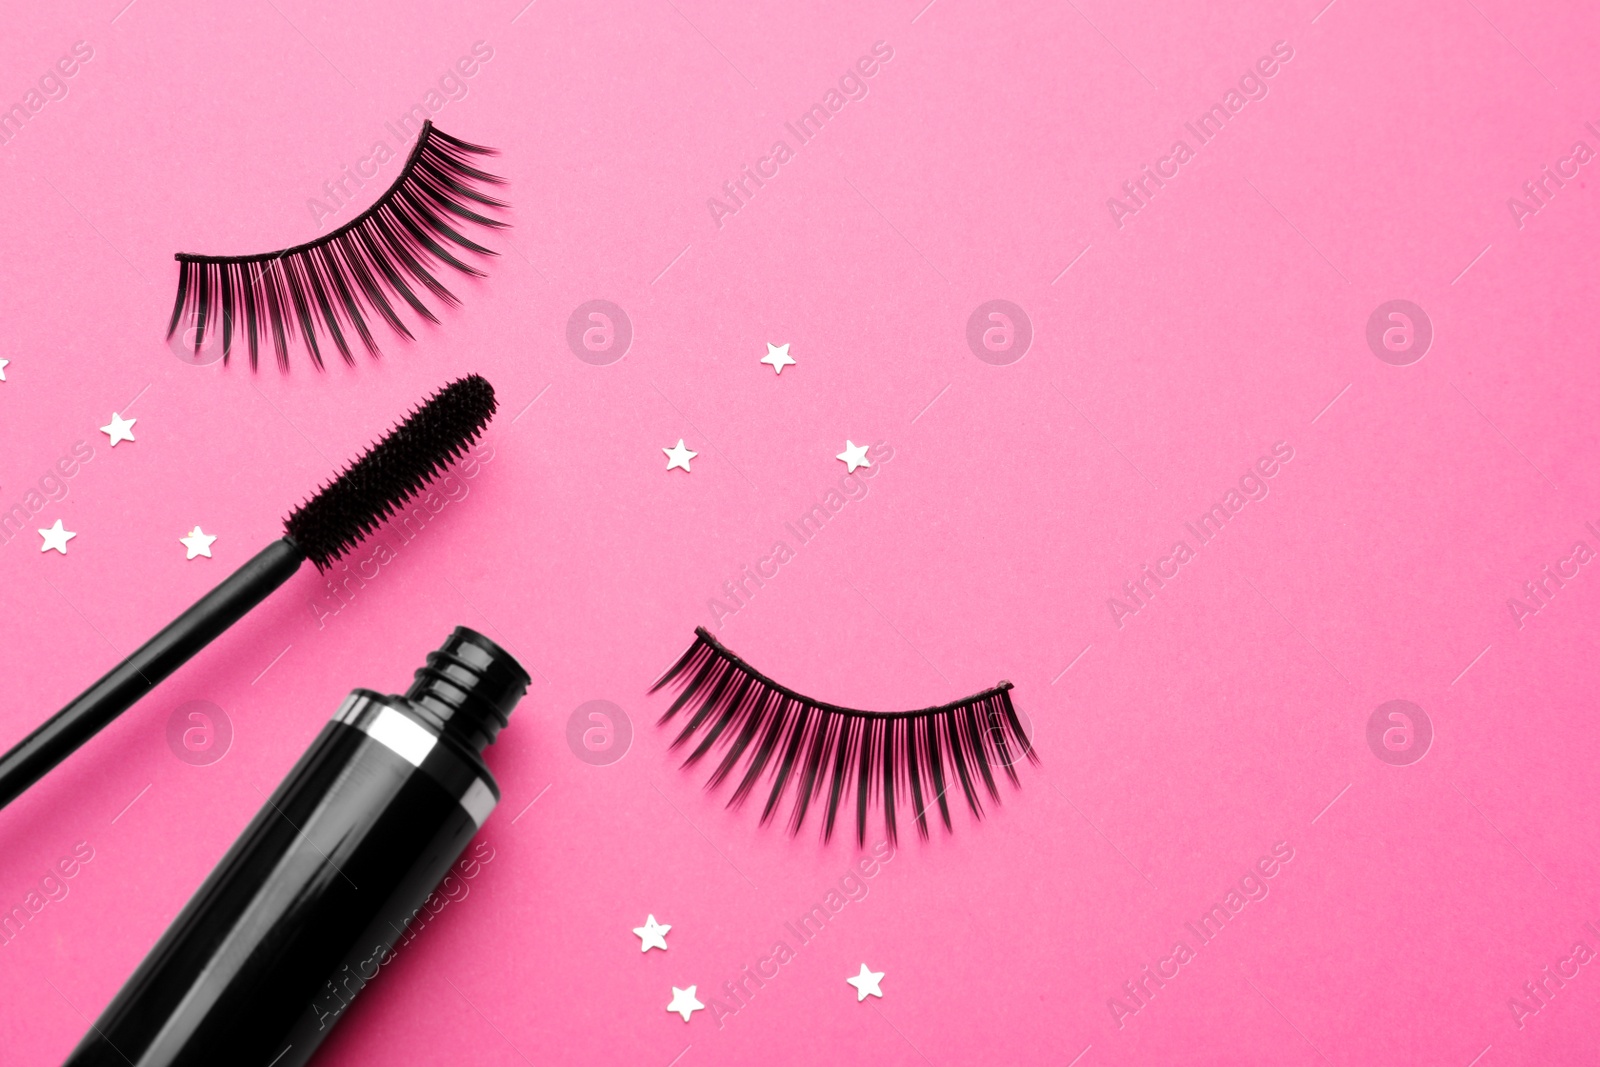 Photo of False eyelashes and mascara on pink background, flat lay. Space for text